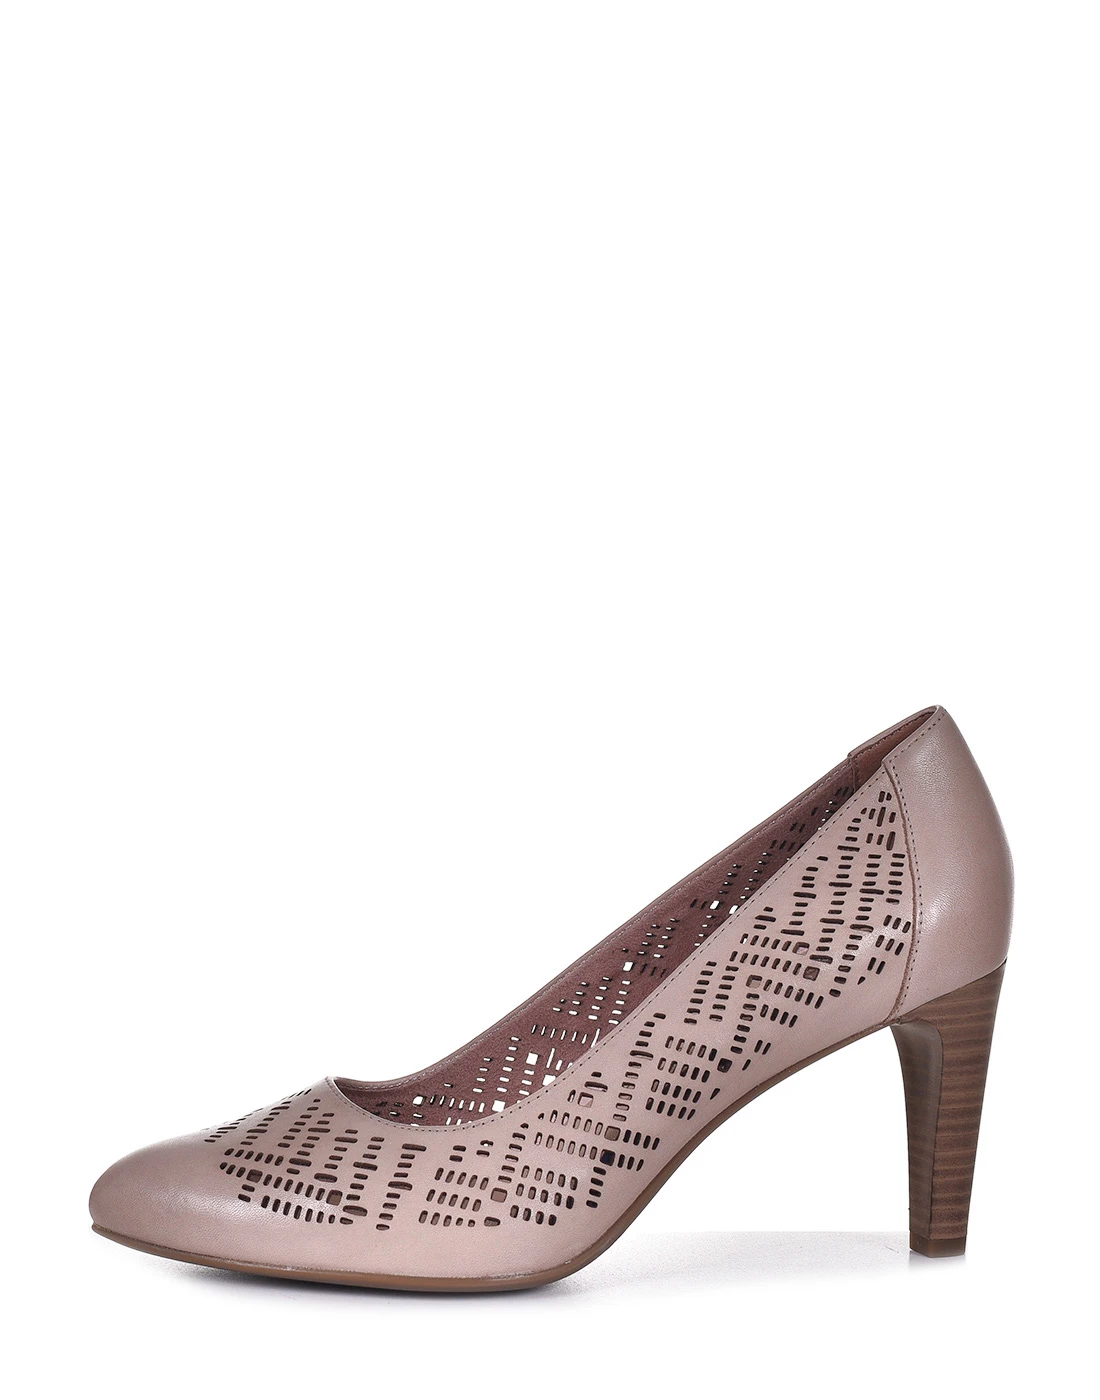 Shoes Tamaris, for women, color beige, of shoes leather Pumps| - AliExpress